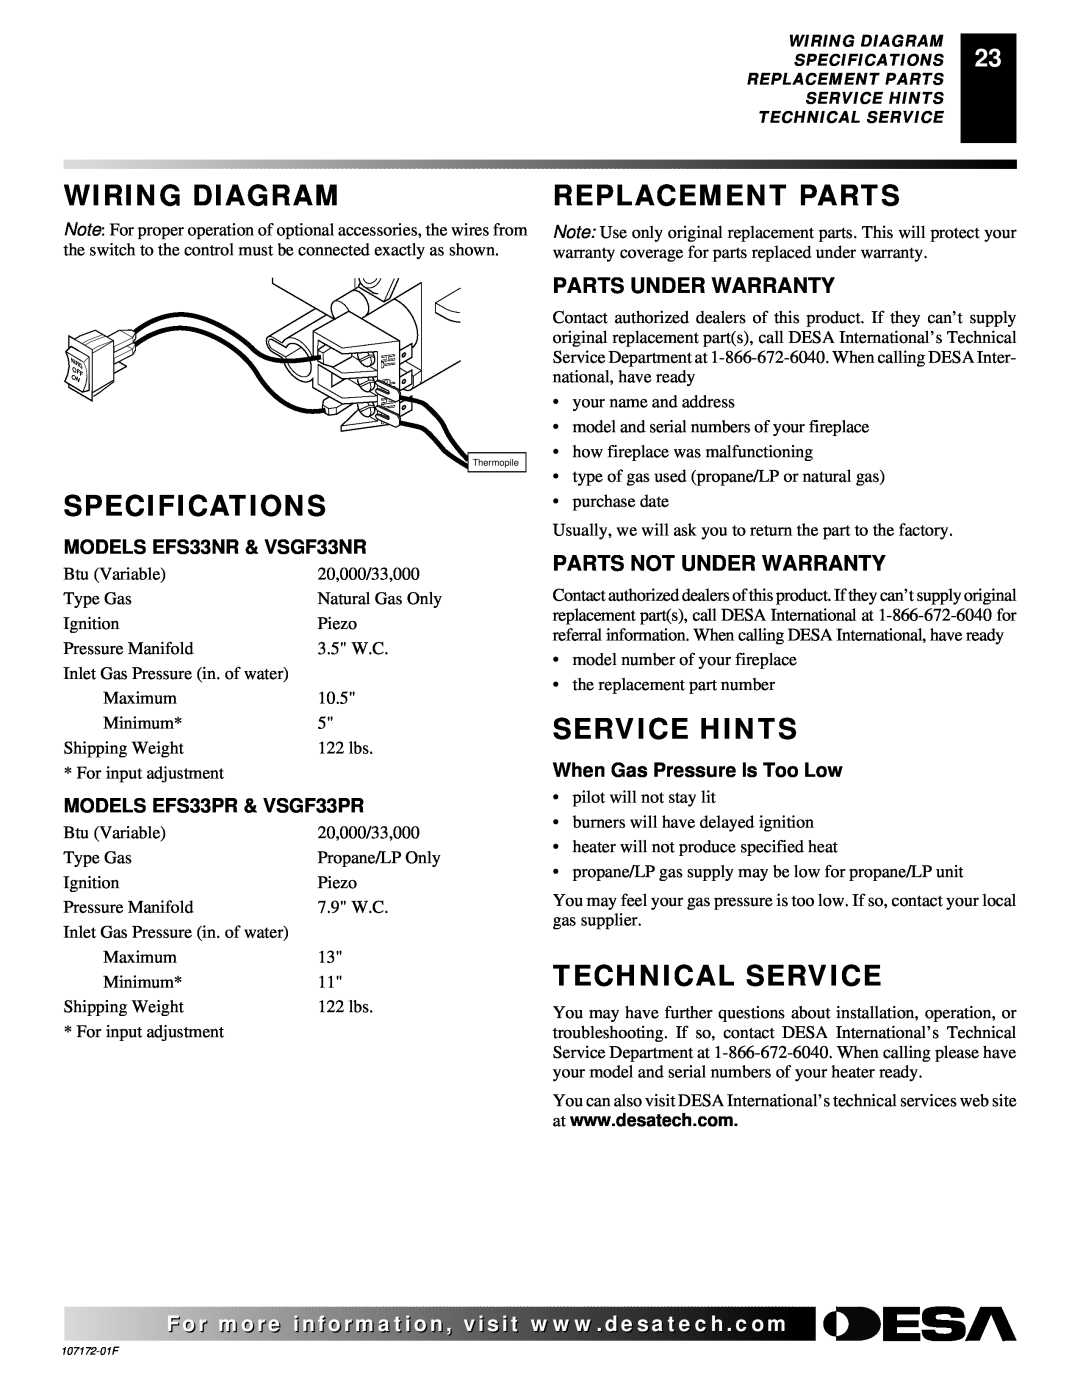 Desa EFS33PR Wiring Diagram, Specifications, Replacement Parts, Service Hints, Technical Service, Parts Under Warranty 